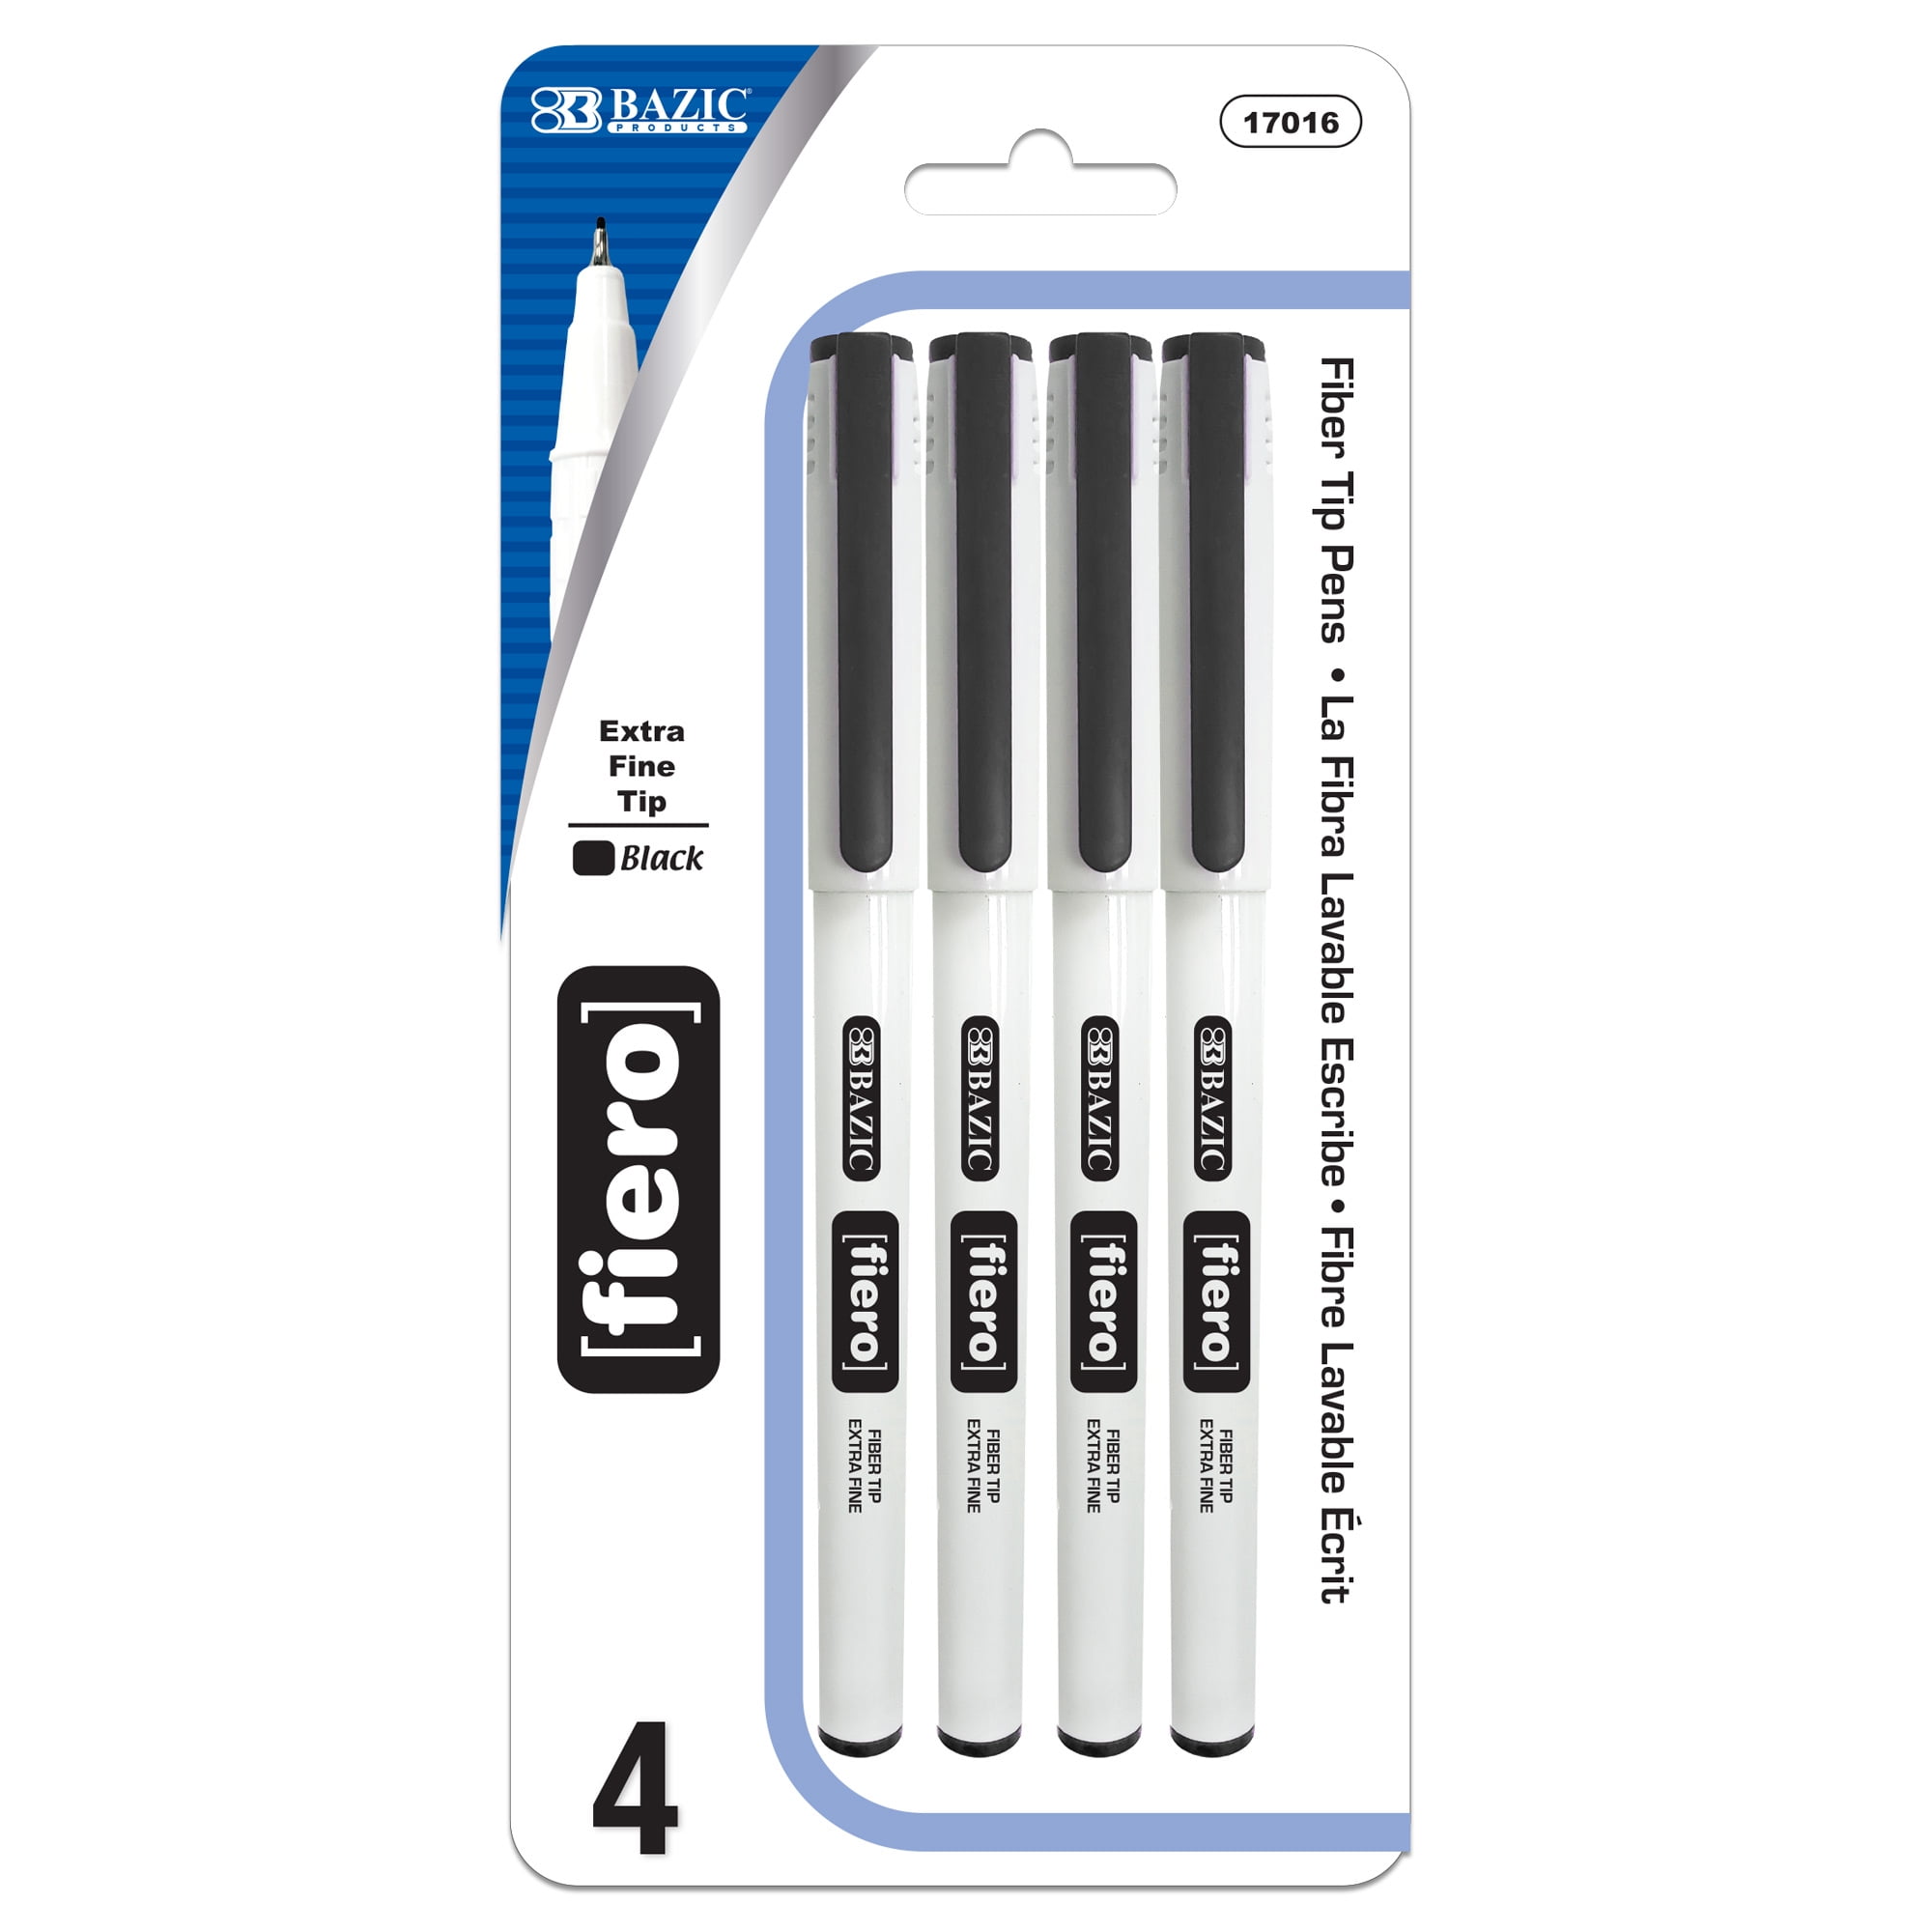  Mr. Pen- Black Fineliners, 0.25mm, 4 Pack, Bible Pens